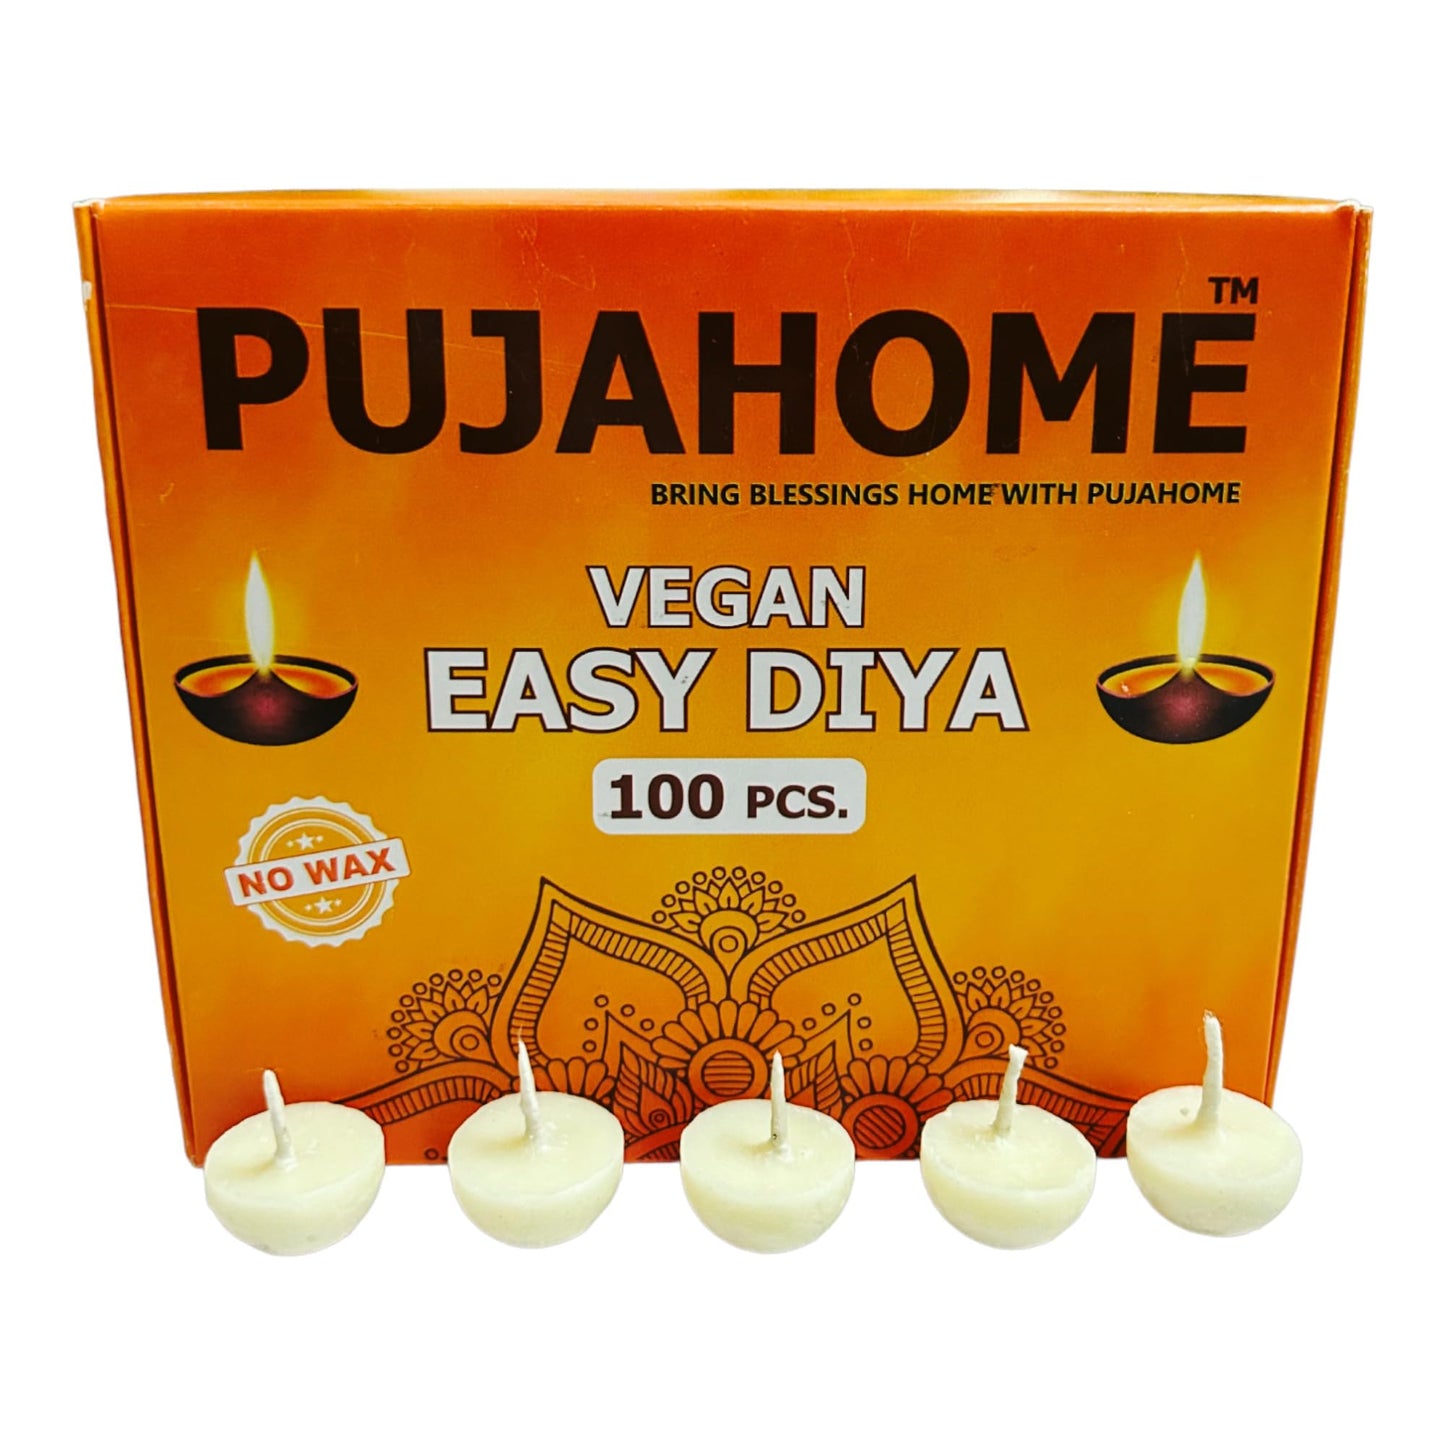 Pujahome Ghee Diya Wicks (100 Pieces - White) 30min Burning Time, Wax Free Vegan Easy Diya